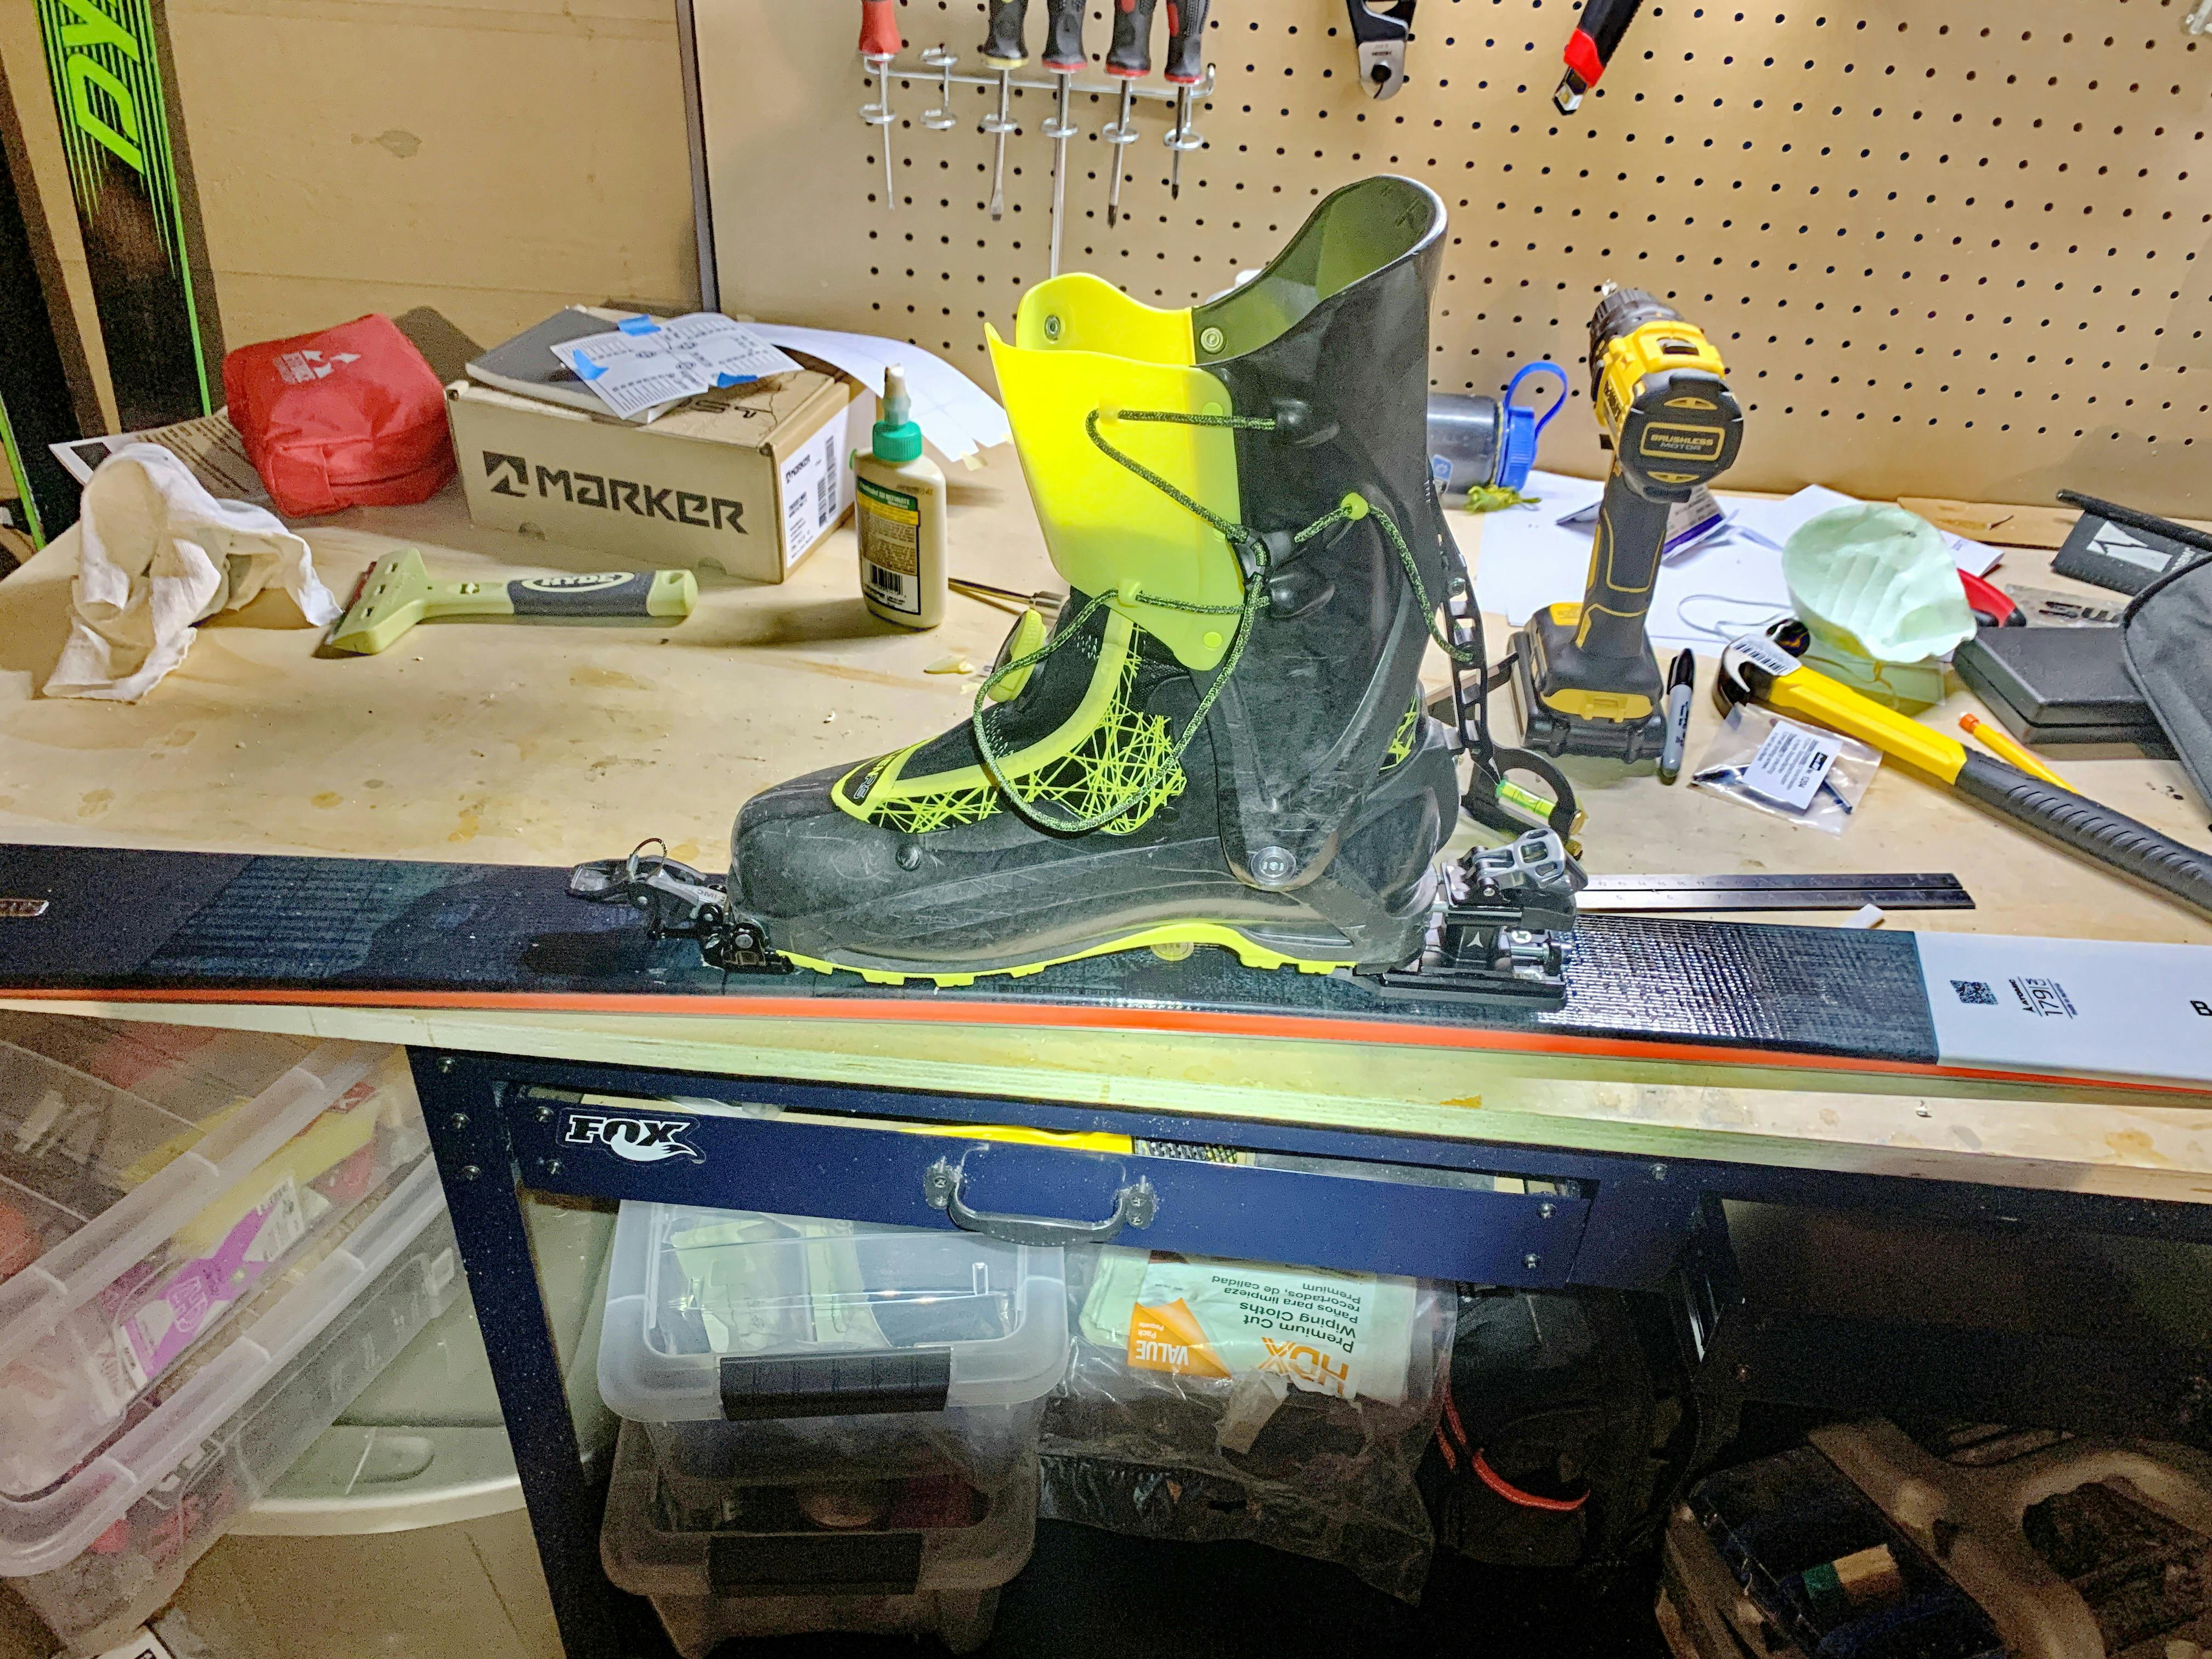 A ski binding being mounted on a ski. 